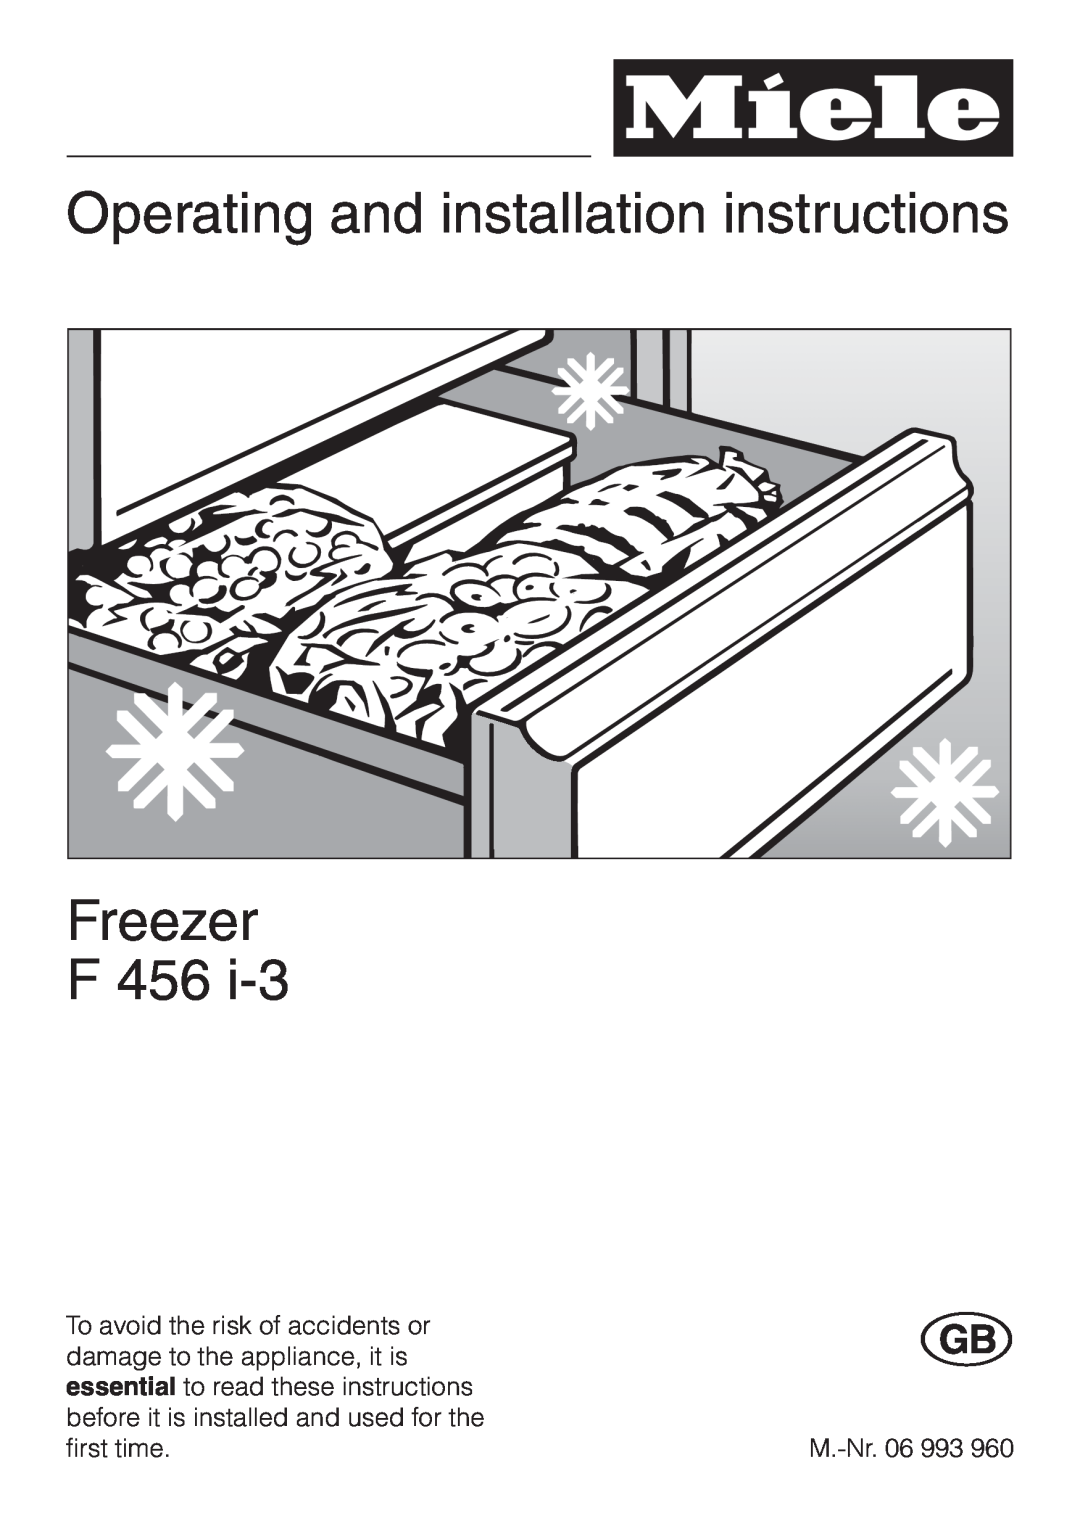 Miele F 456 i-3 installation instructions Operating and installation instructions, Freezer 